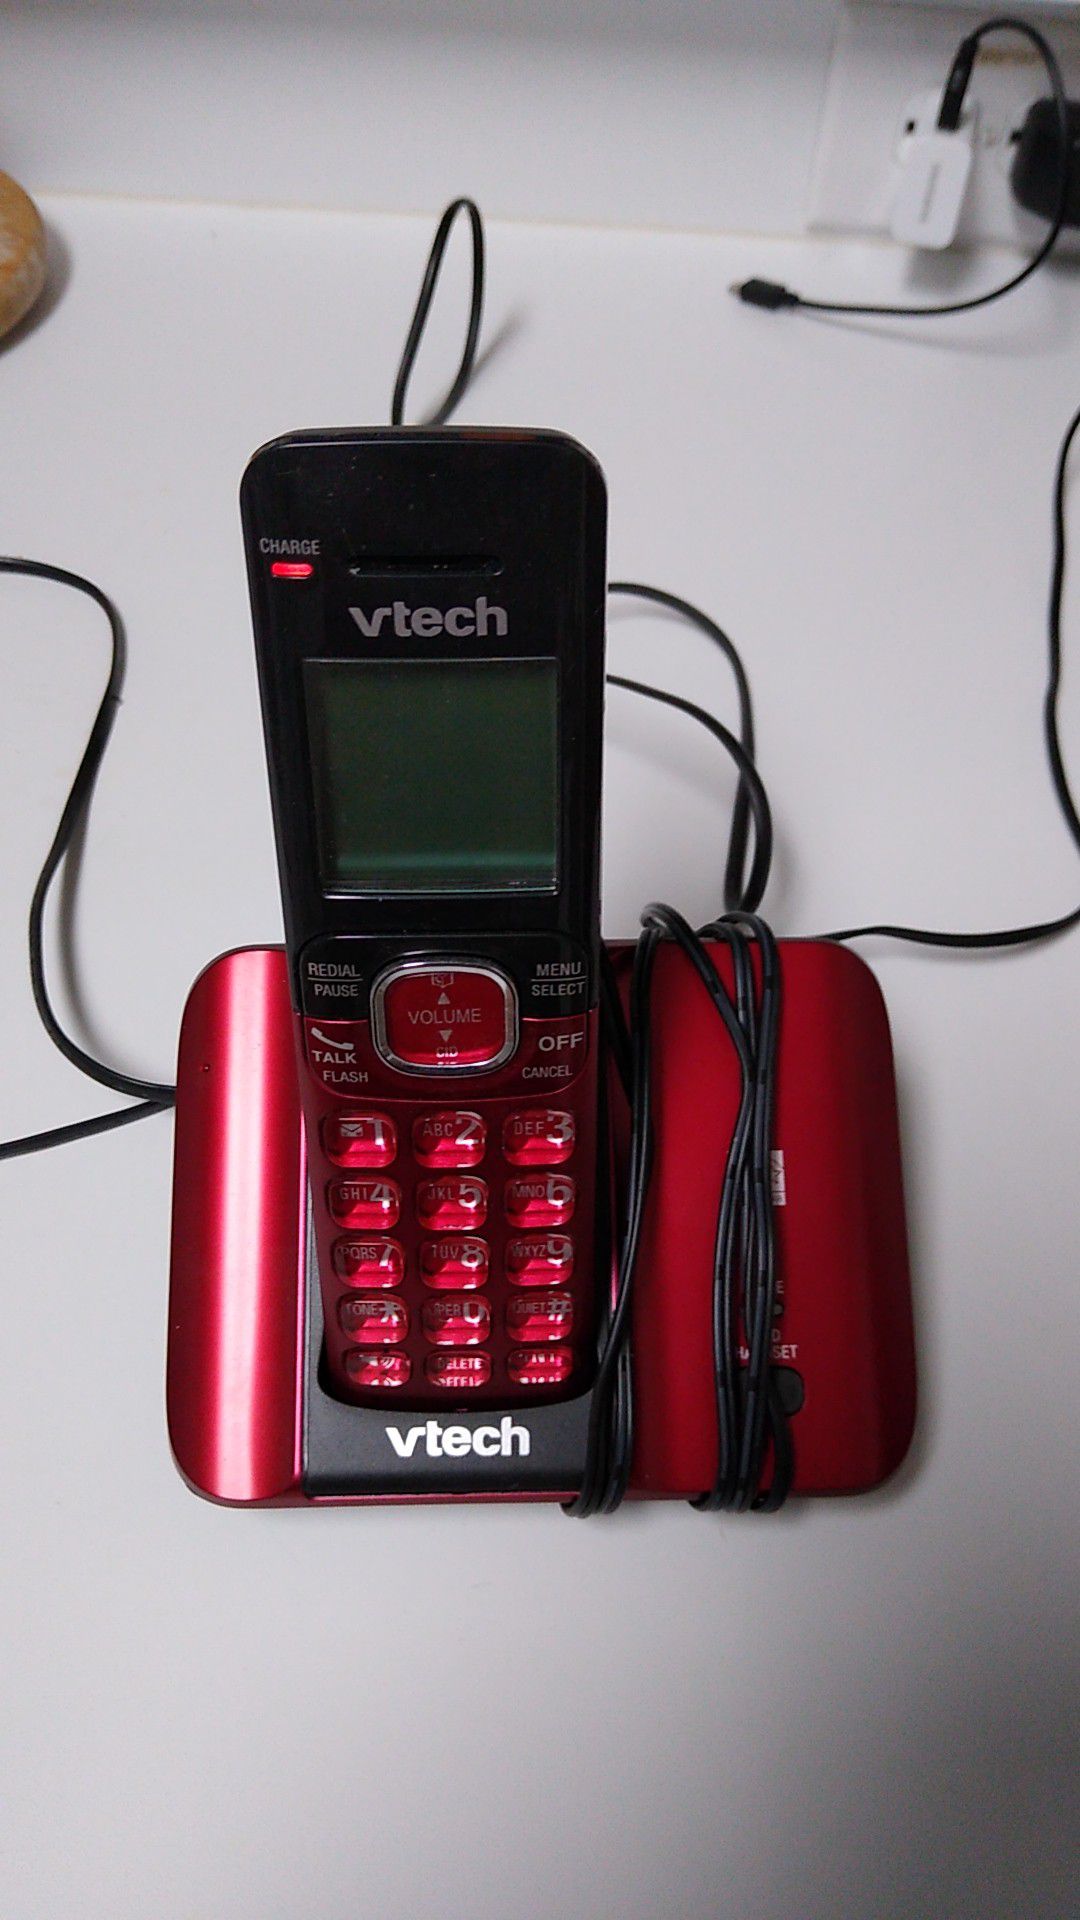 V Tech CORDLESS Landline phone